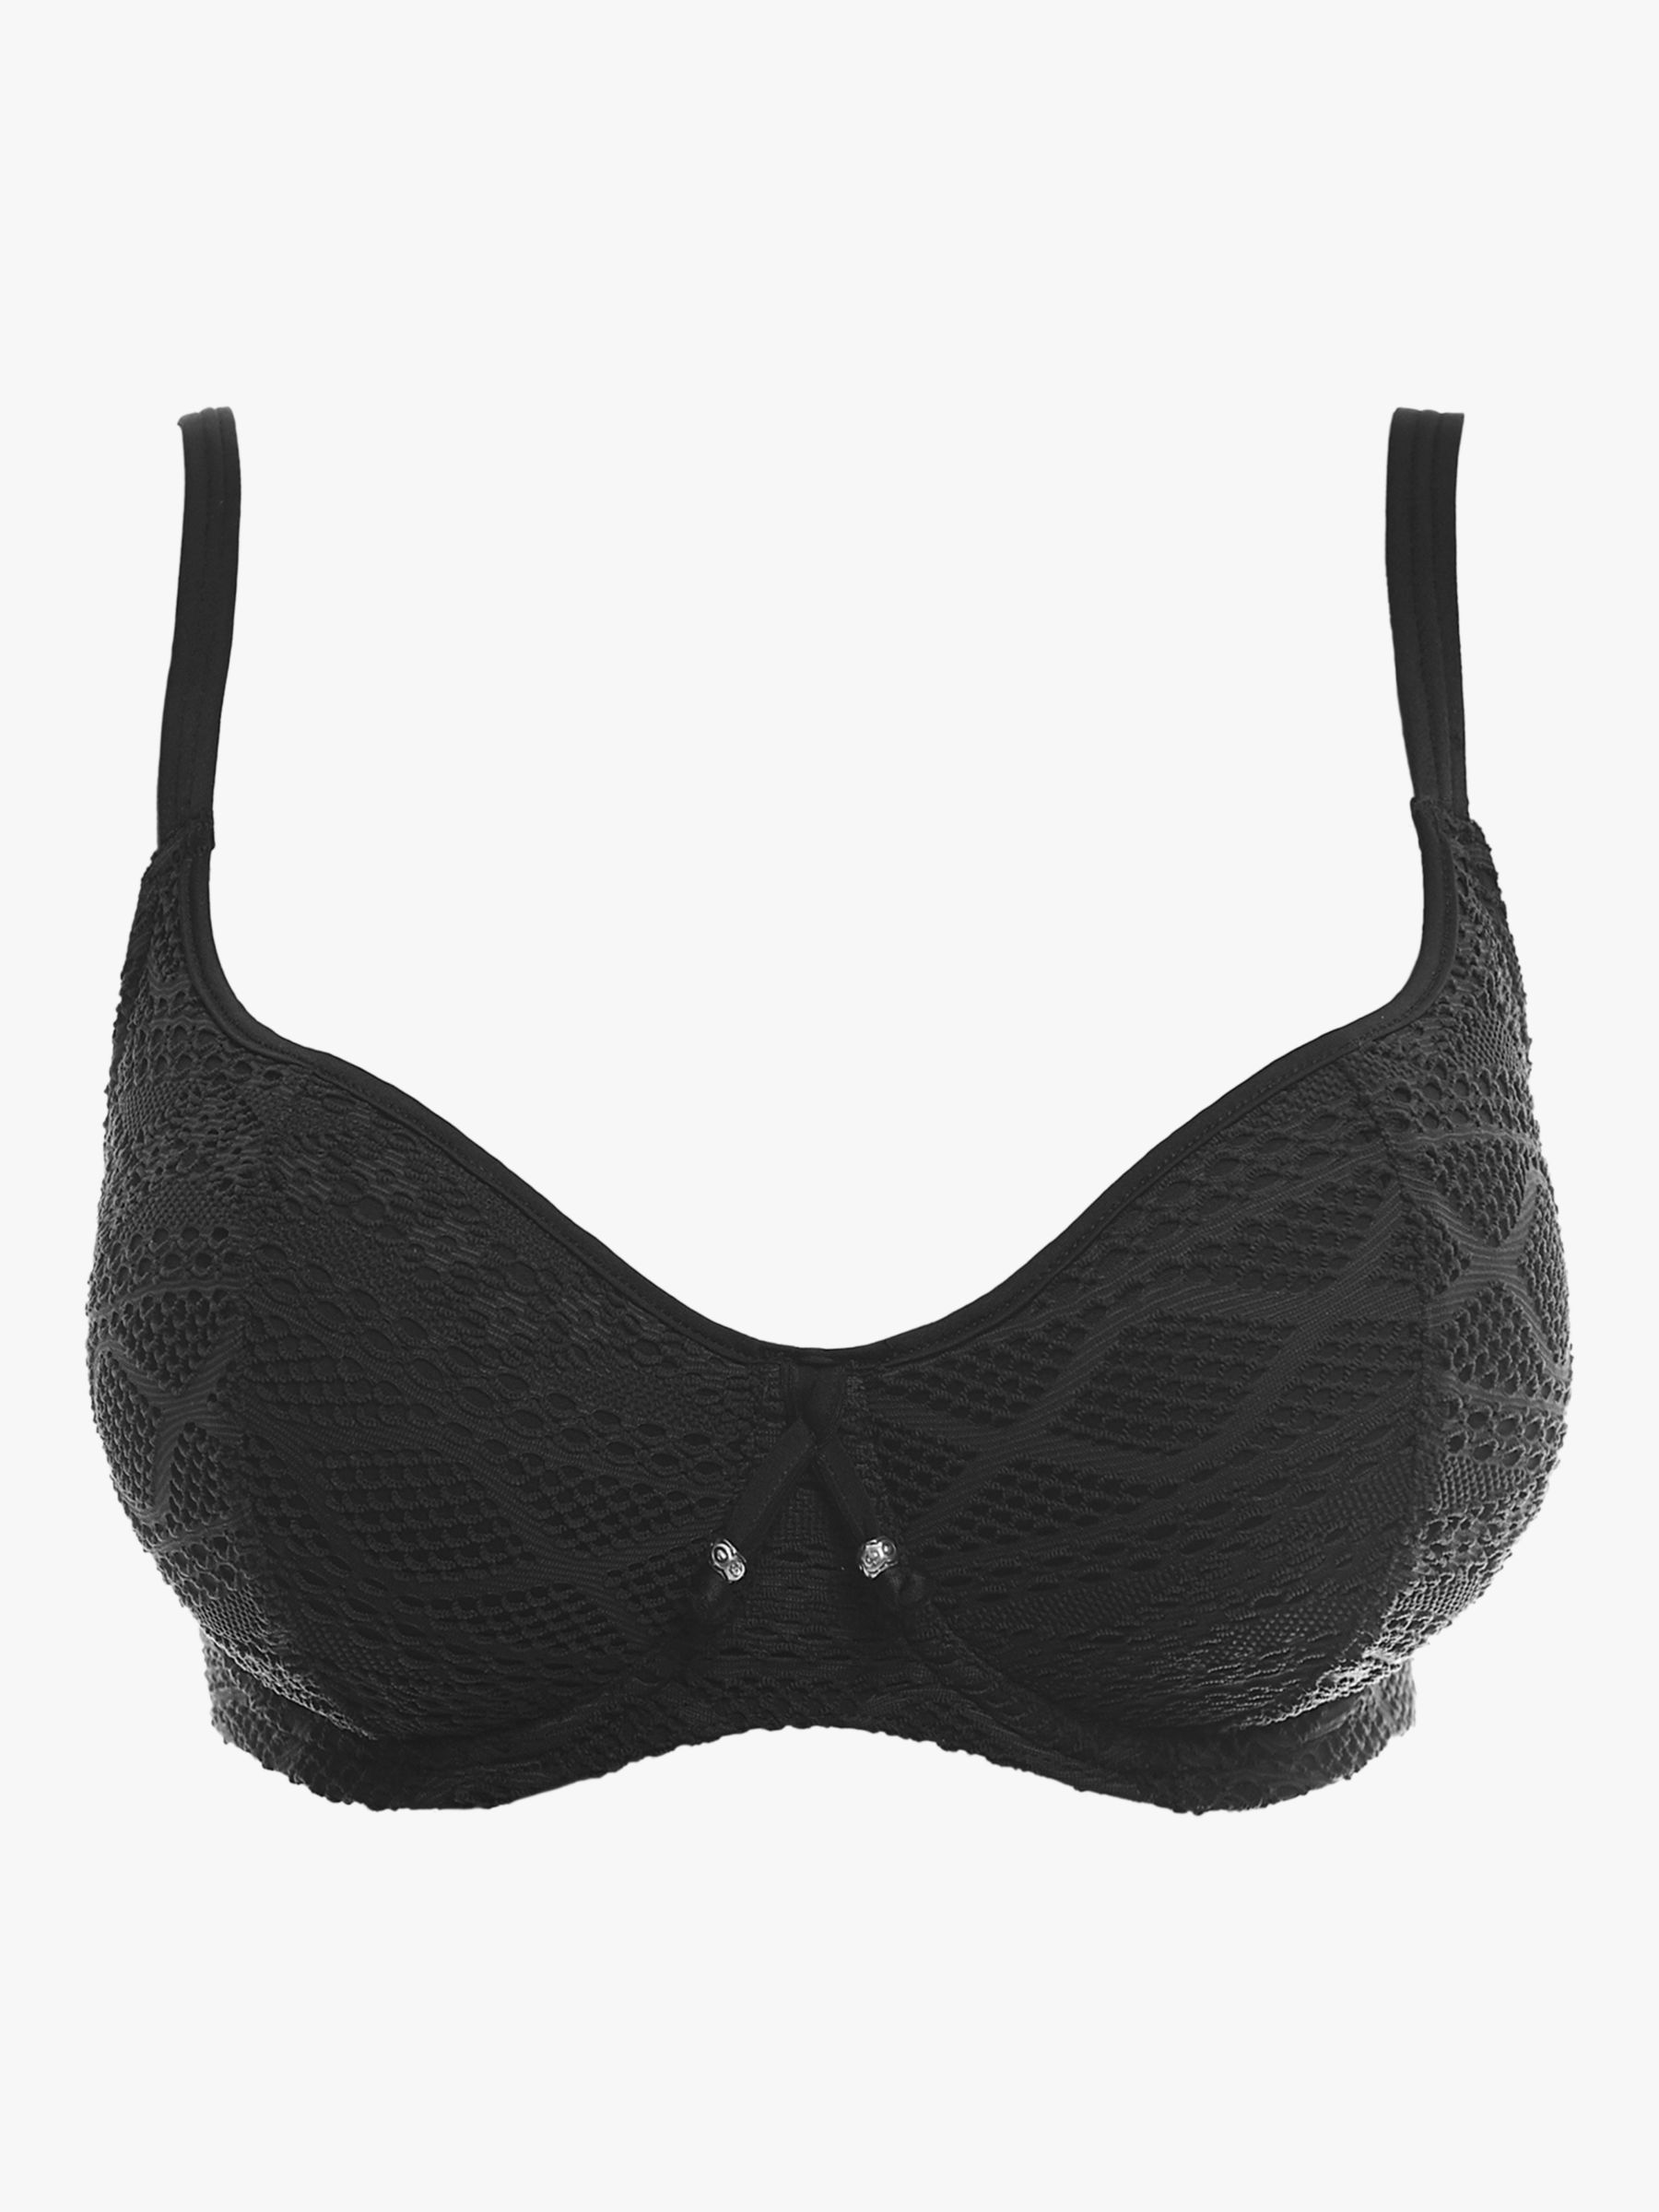 Freya Sundance Padded Bikini Top, Black